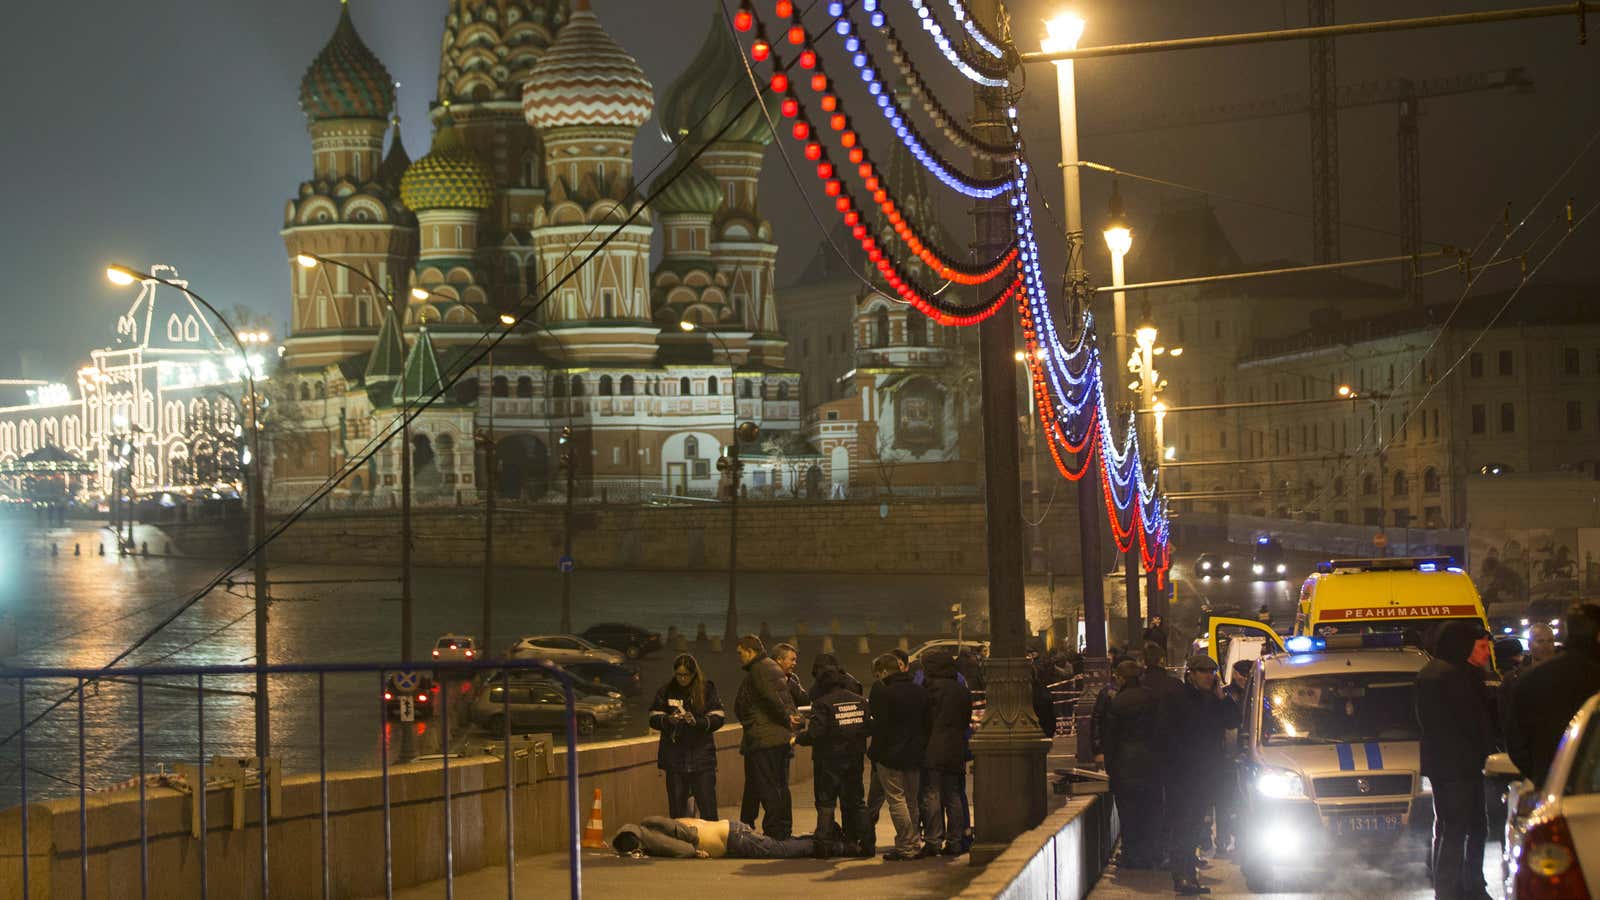 Boris Nemtsov’s body in the shadow of St. Basil Cathidral.